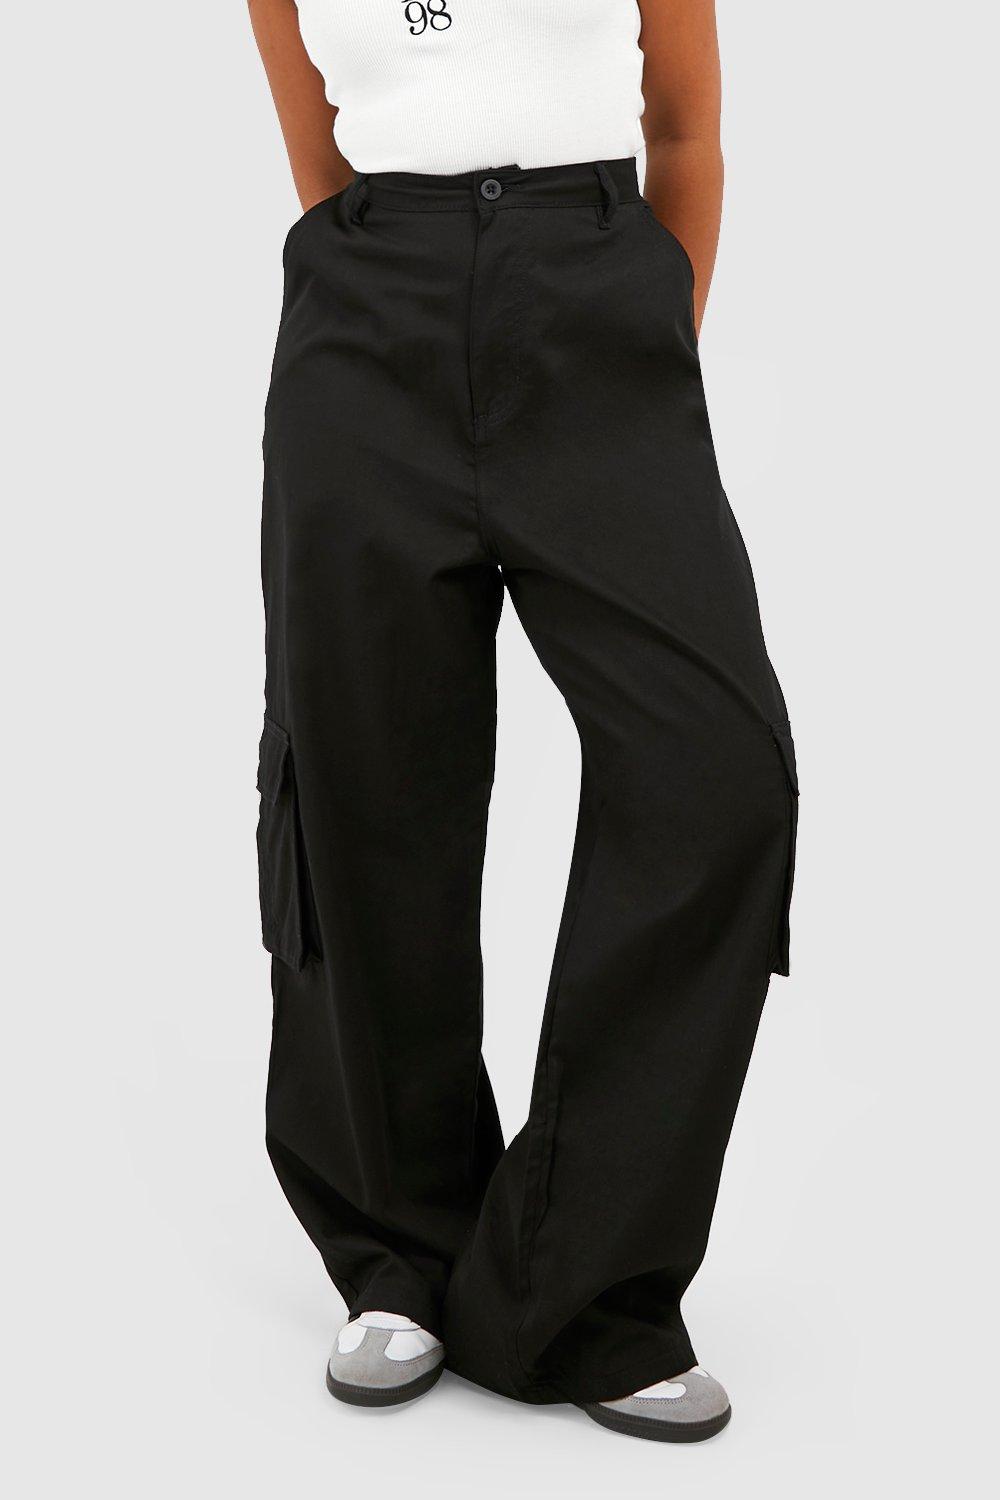 Vintage High Waist Cargo Straight Pants For Women GOPLUS Black, White, And  Blue Margiela Jeans Femme Taille Haute Broeken Dames 201105 From Mu02,  $24.98